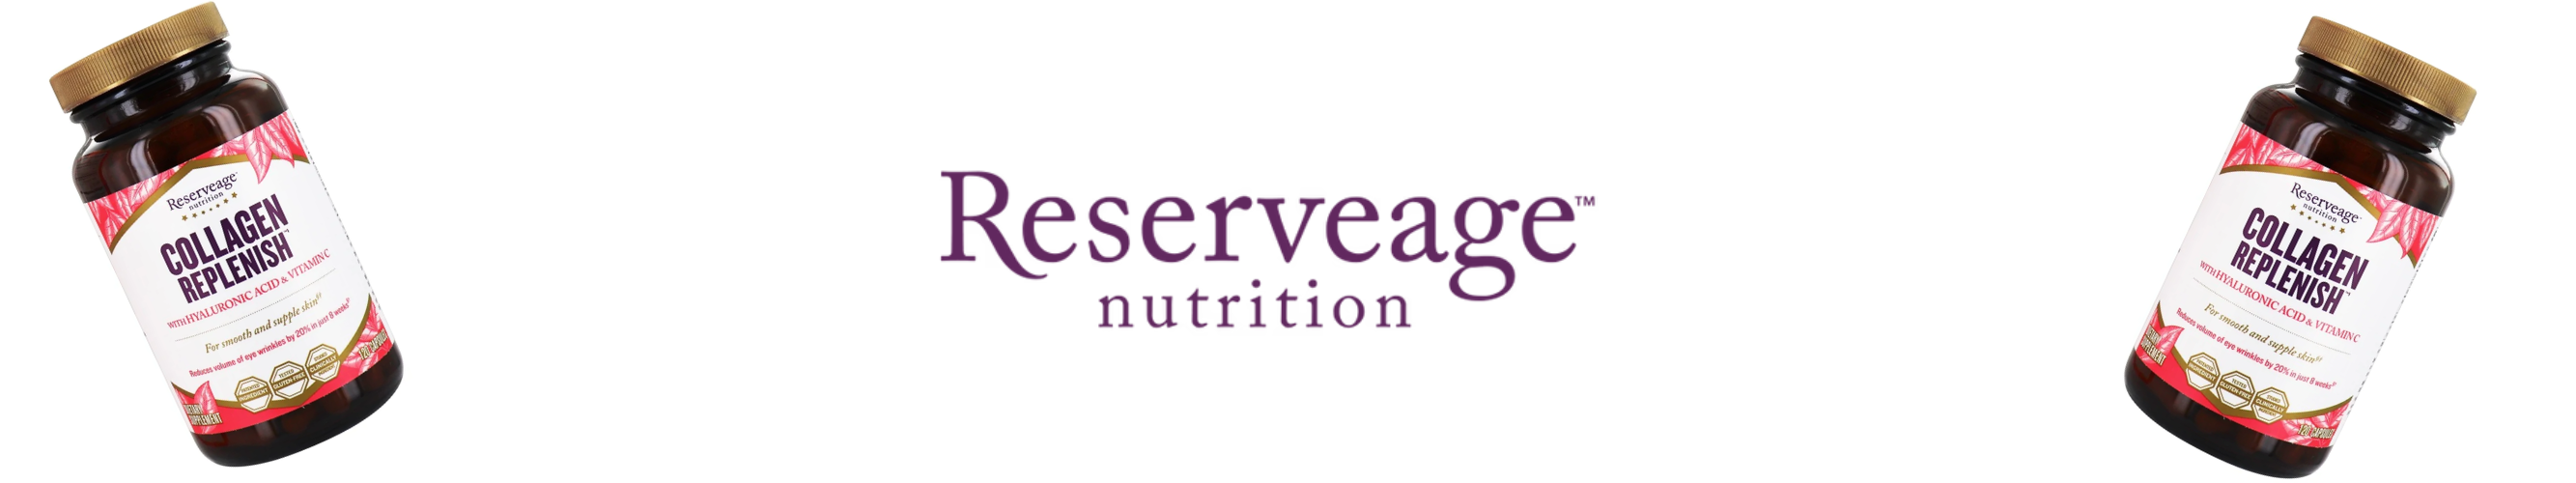 HiLife Vitamins | Reserveage Nutrition